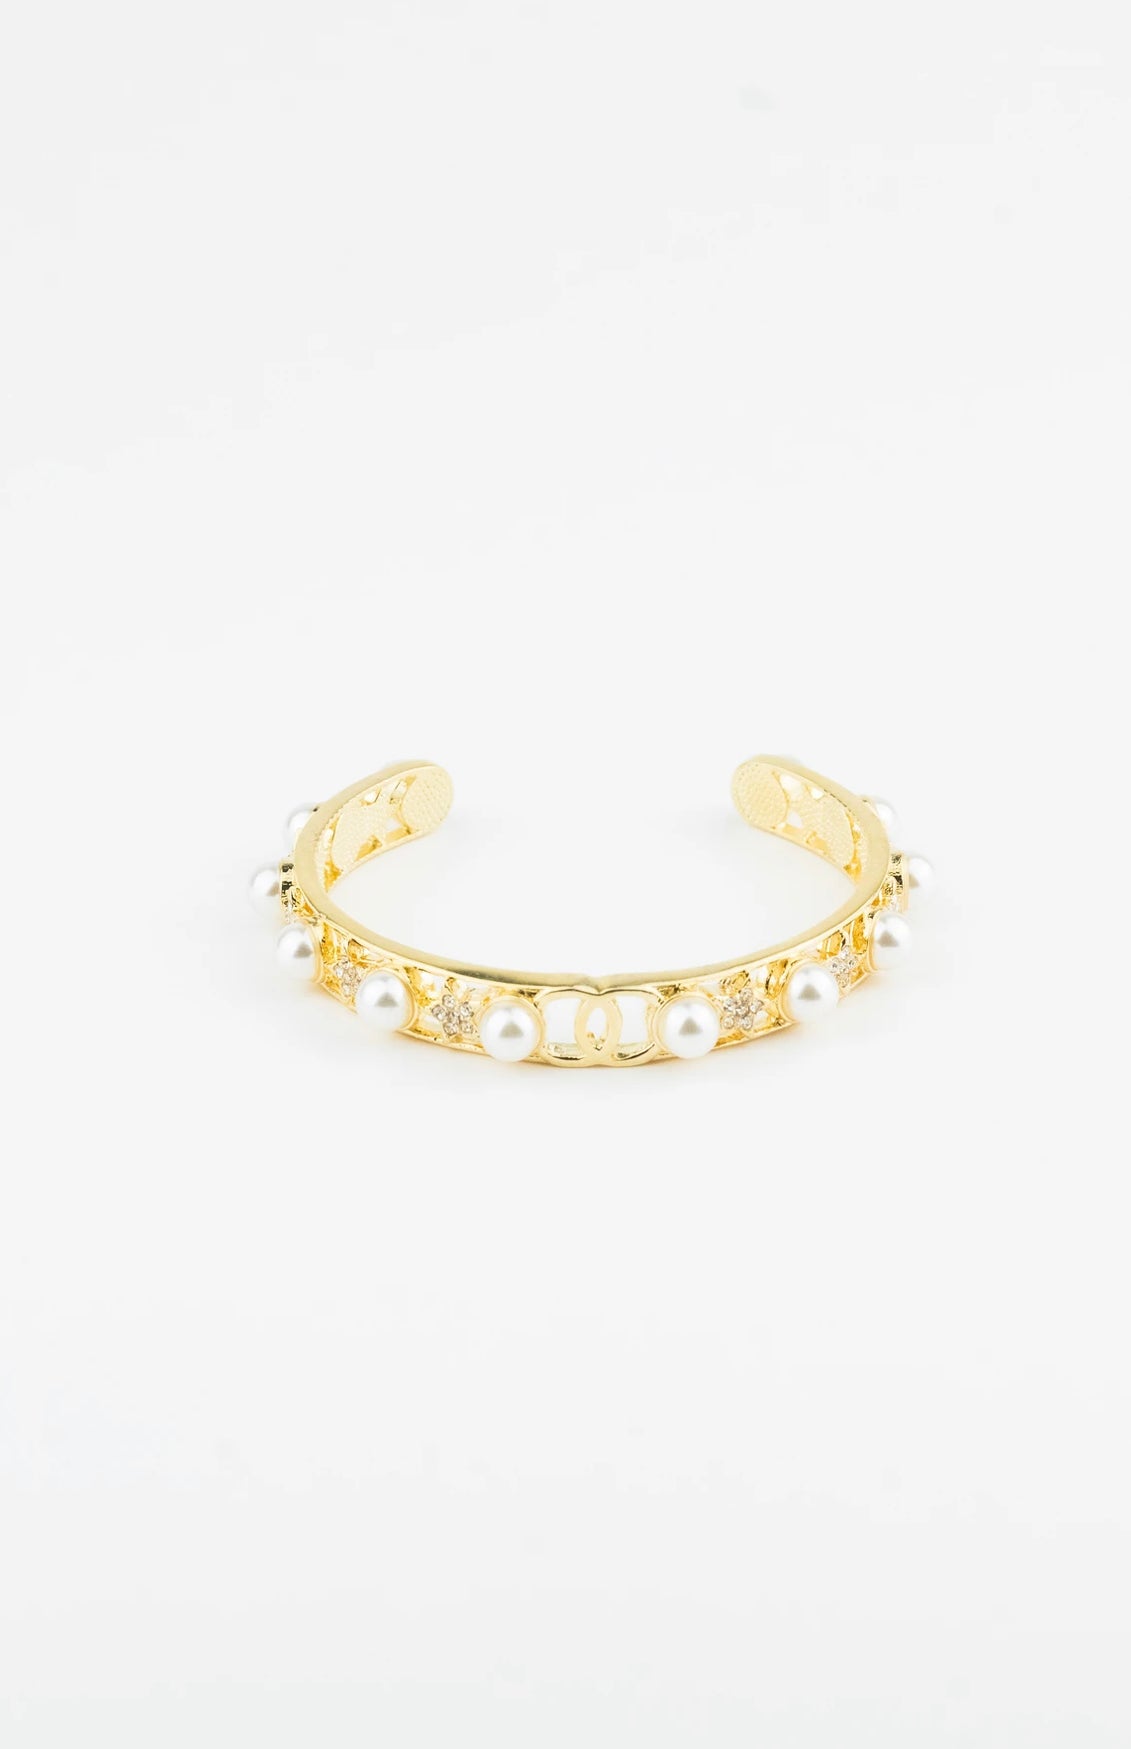 Gold and Pearl Bracelet - Avanti Store